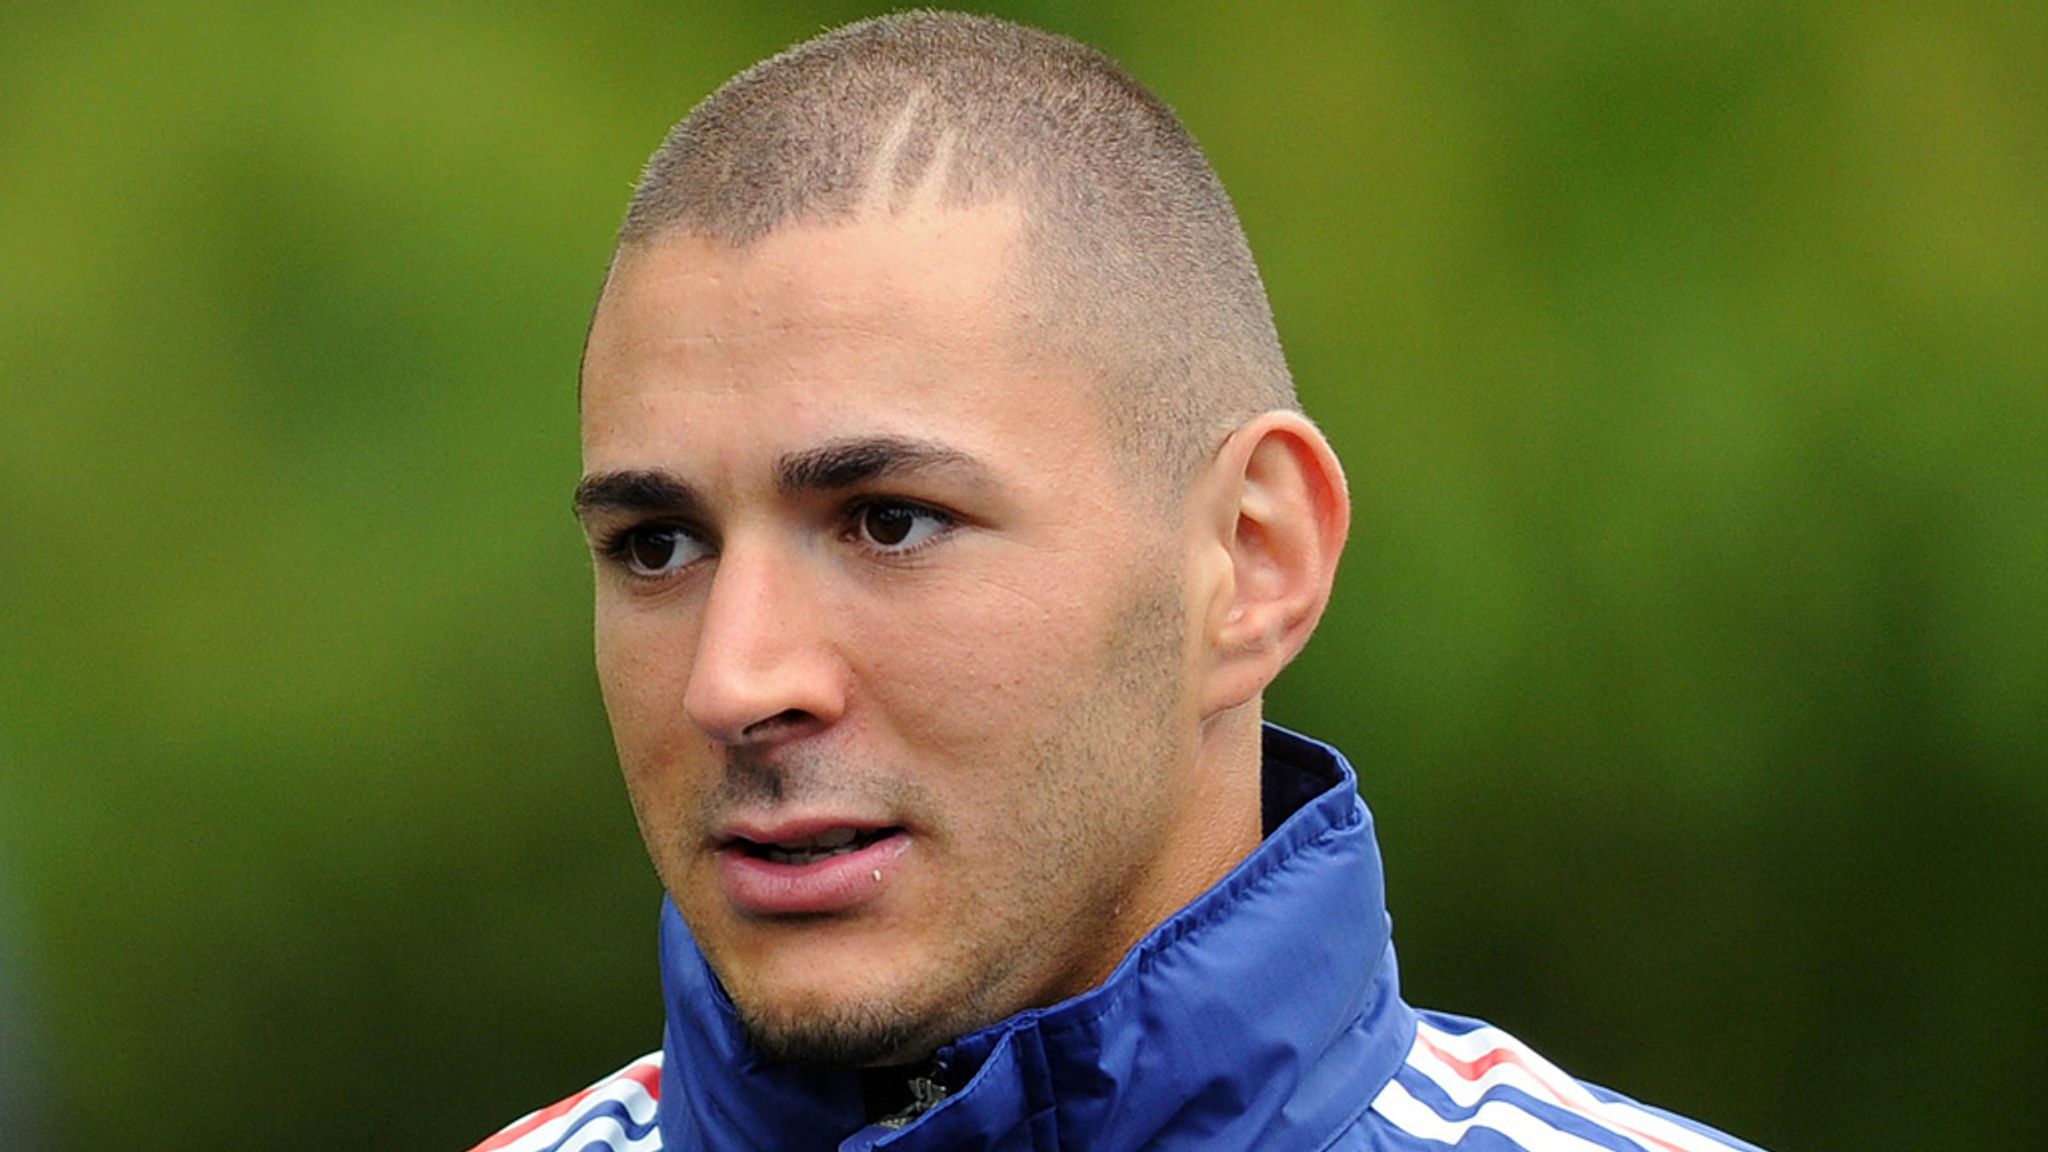 Karim Benzema Haircut